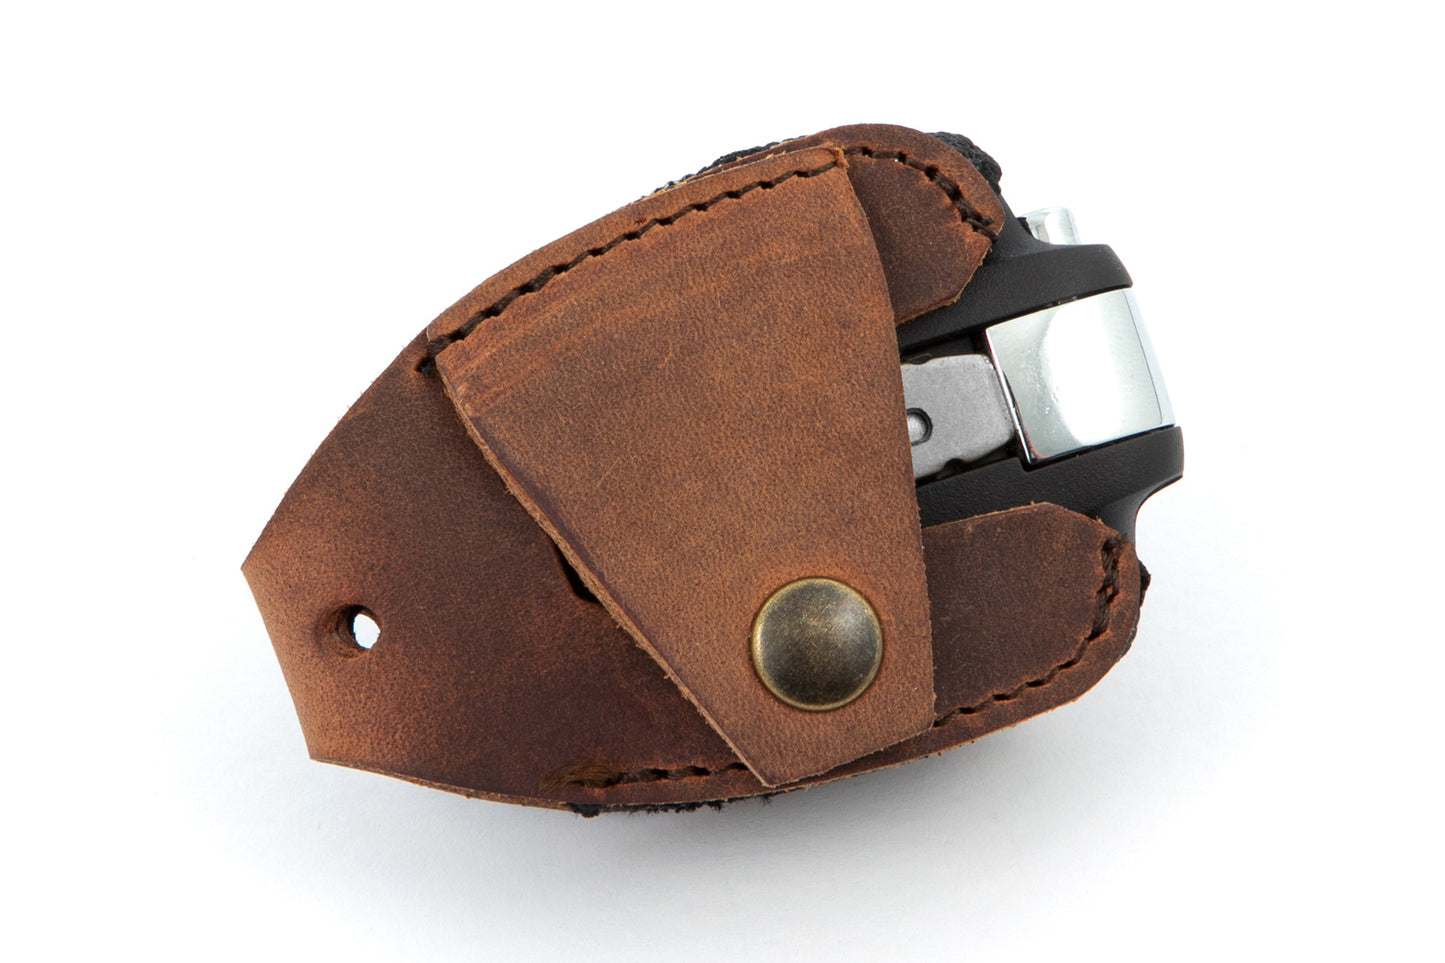 Wunderlich R 18 key pouch - brown - Genuine leather